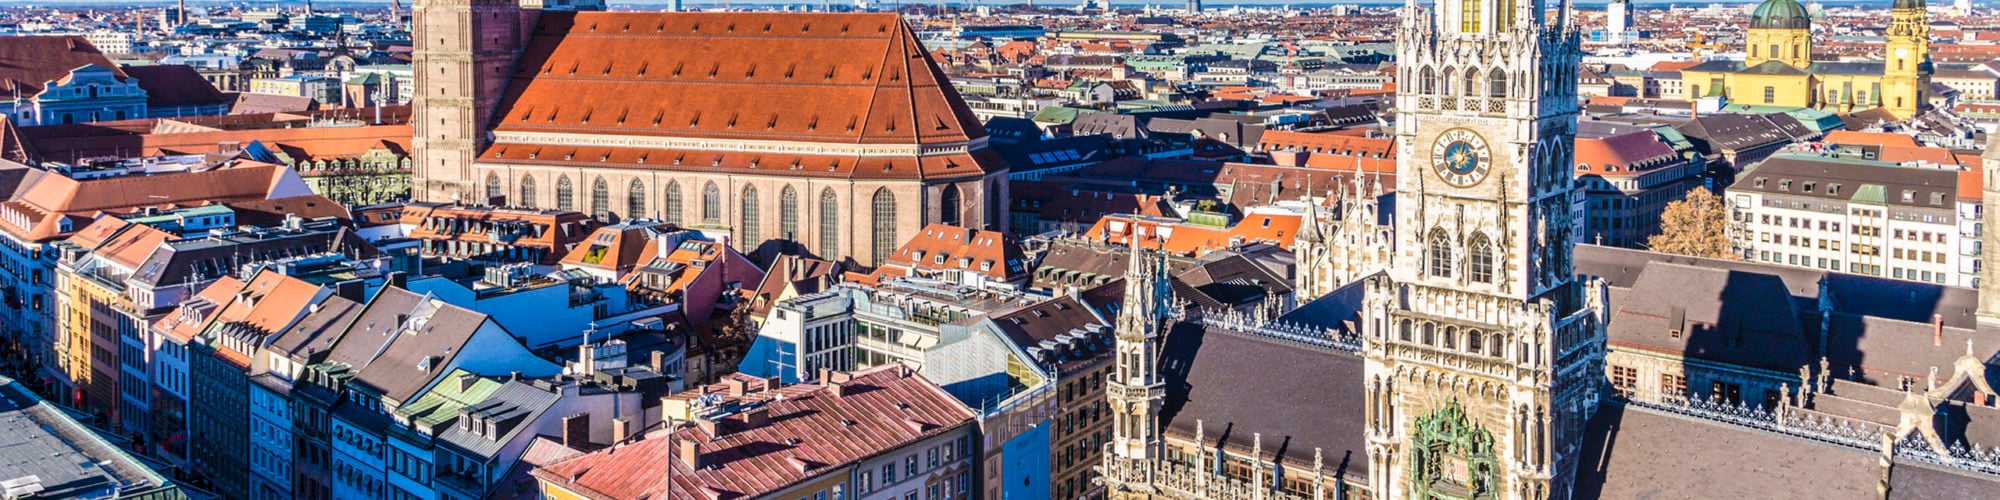 Munich Travel travel agents packages deals